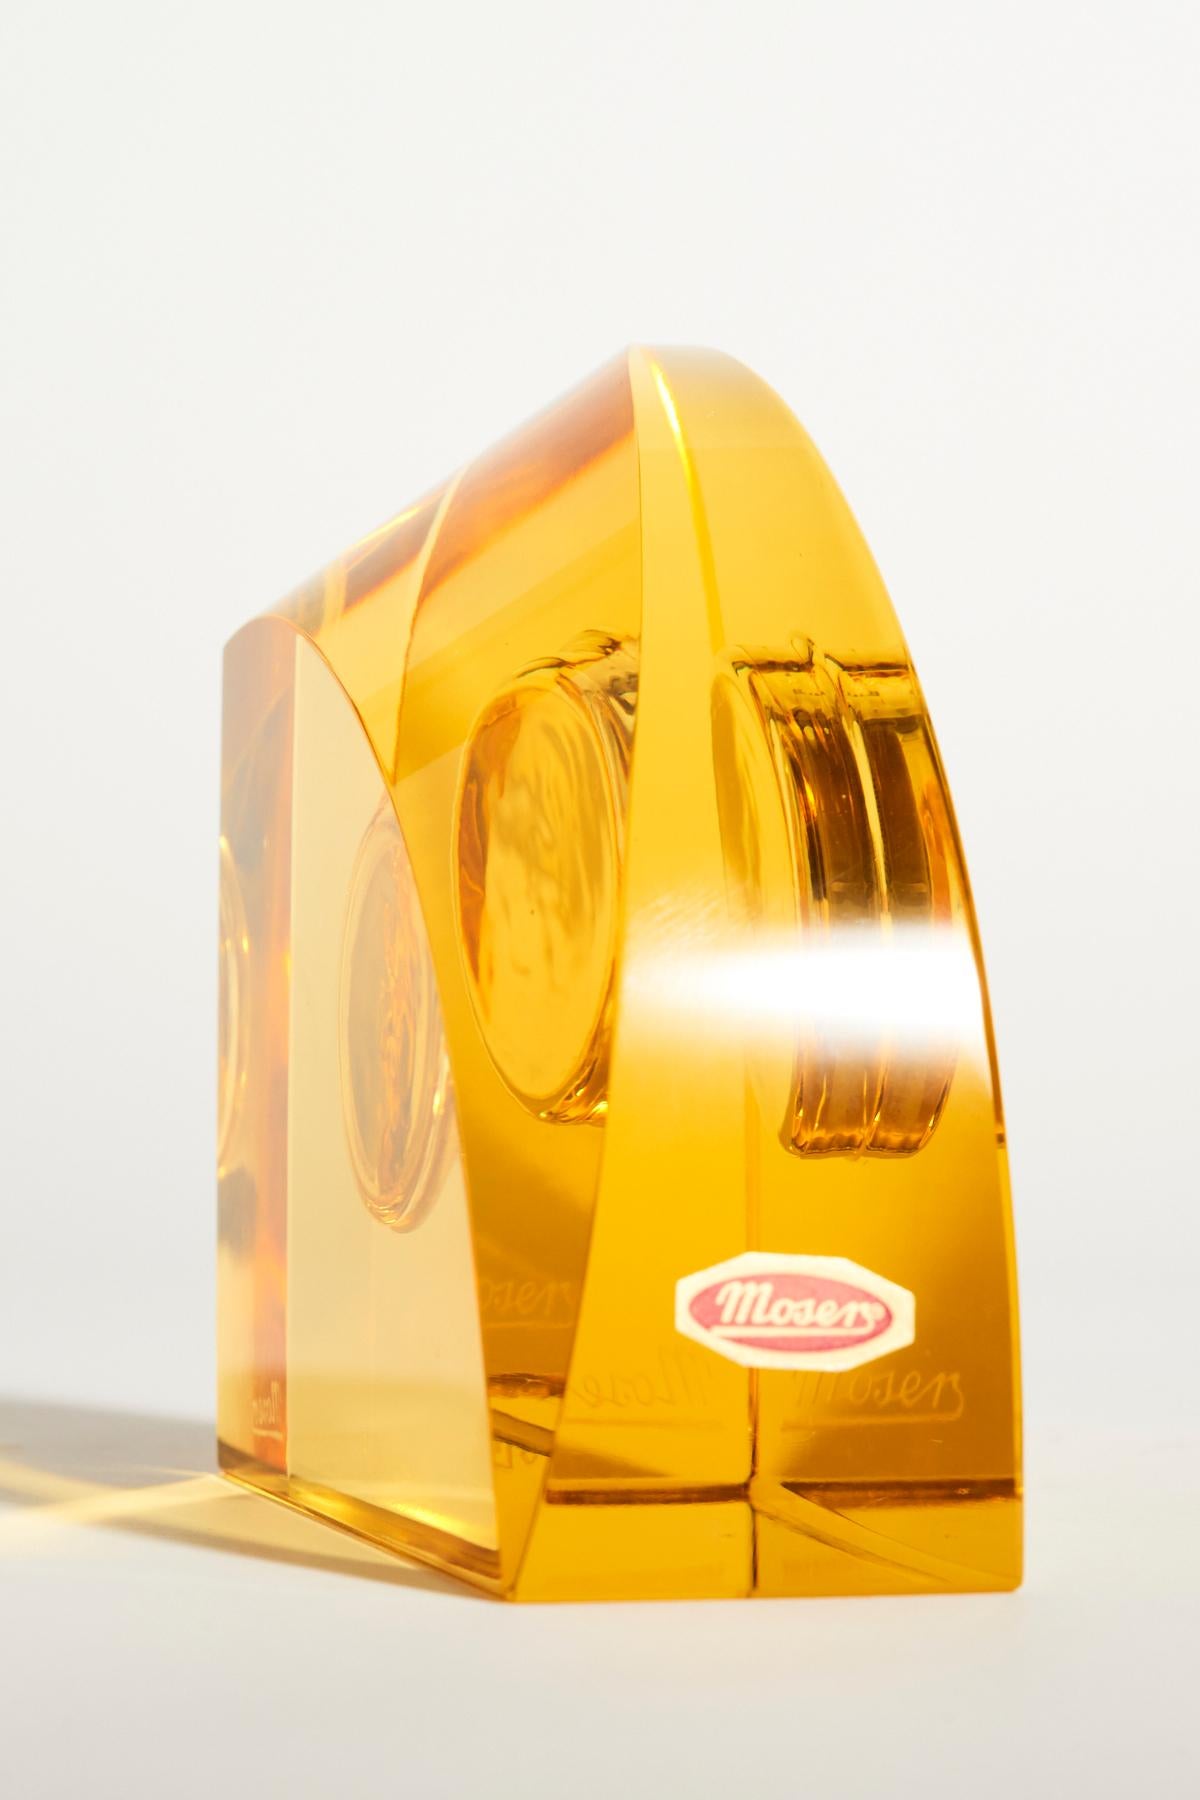 Moser Yellow Glass Clock 3